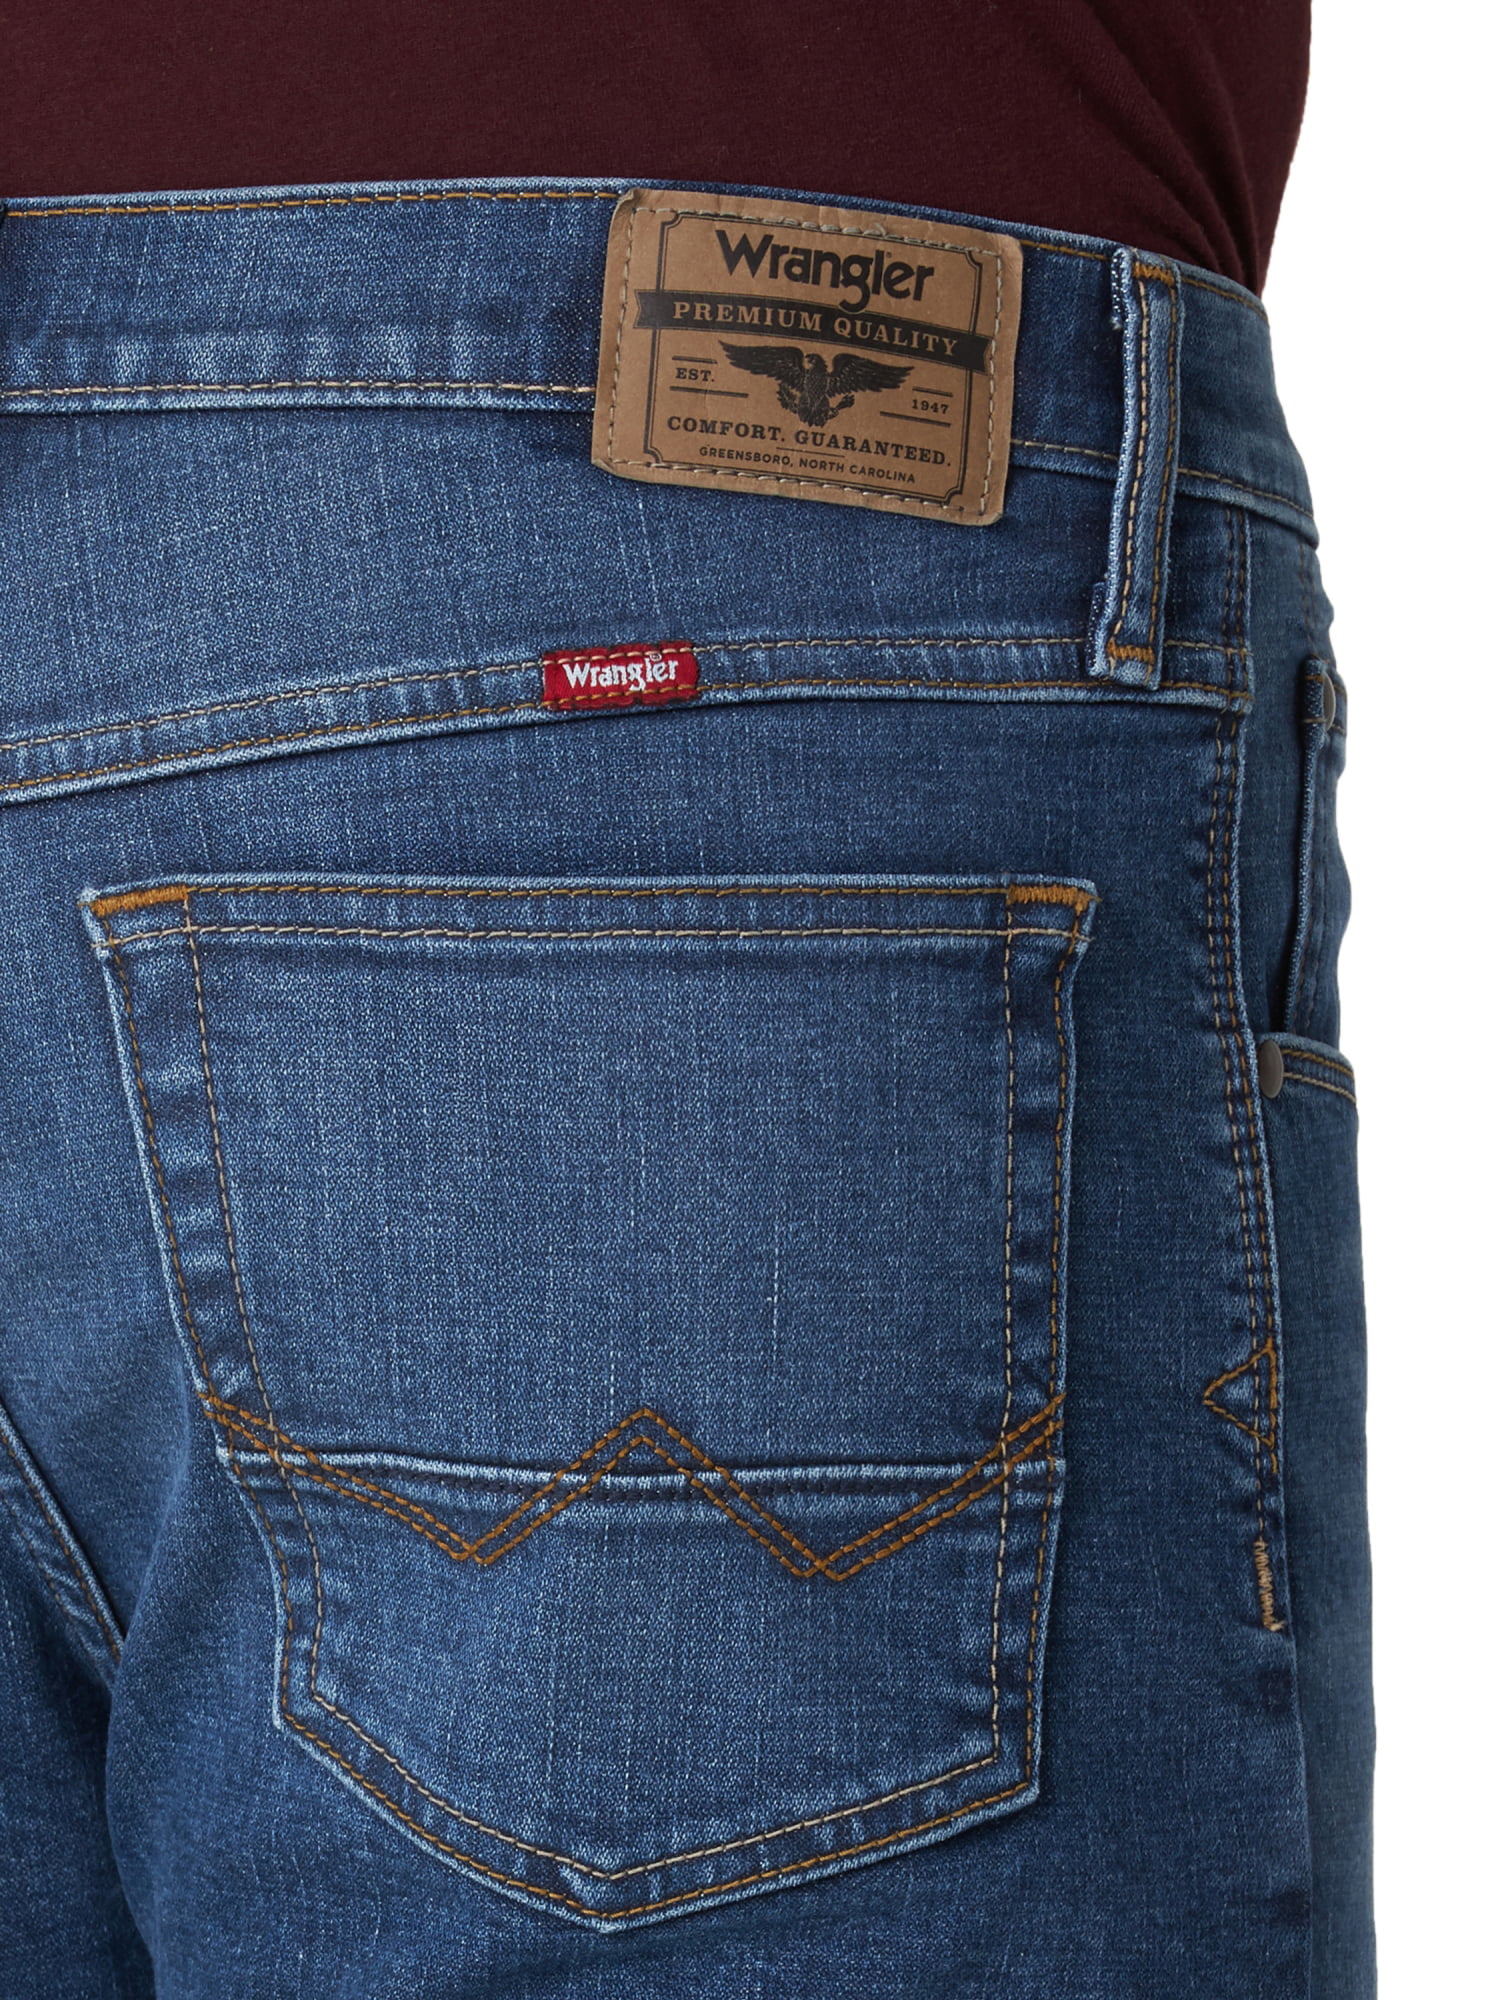 wrangler men's stretch jeans walmart